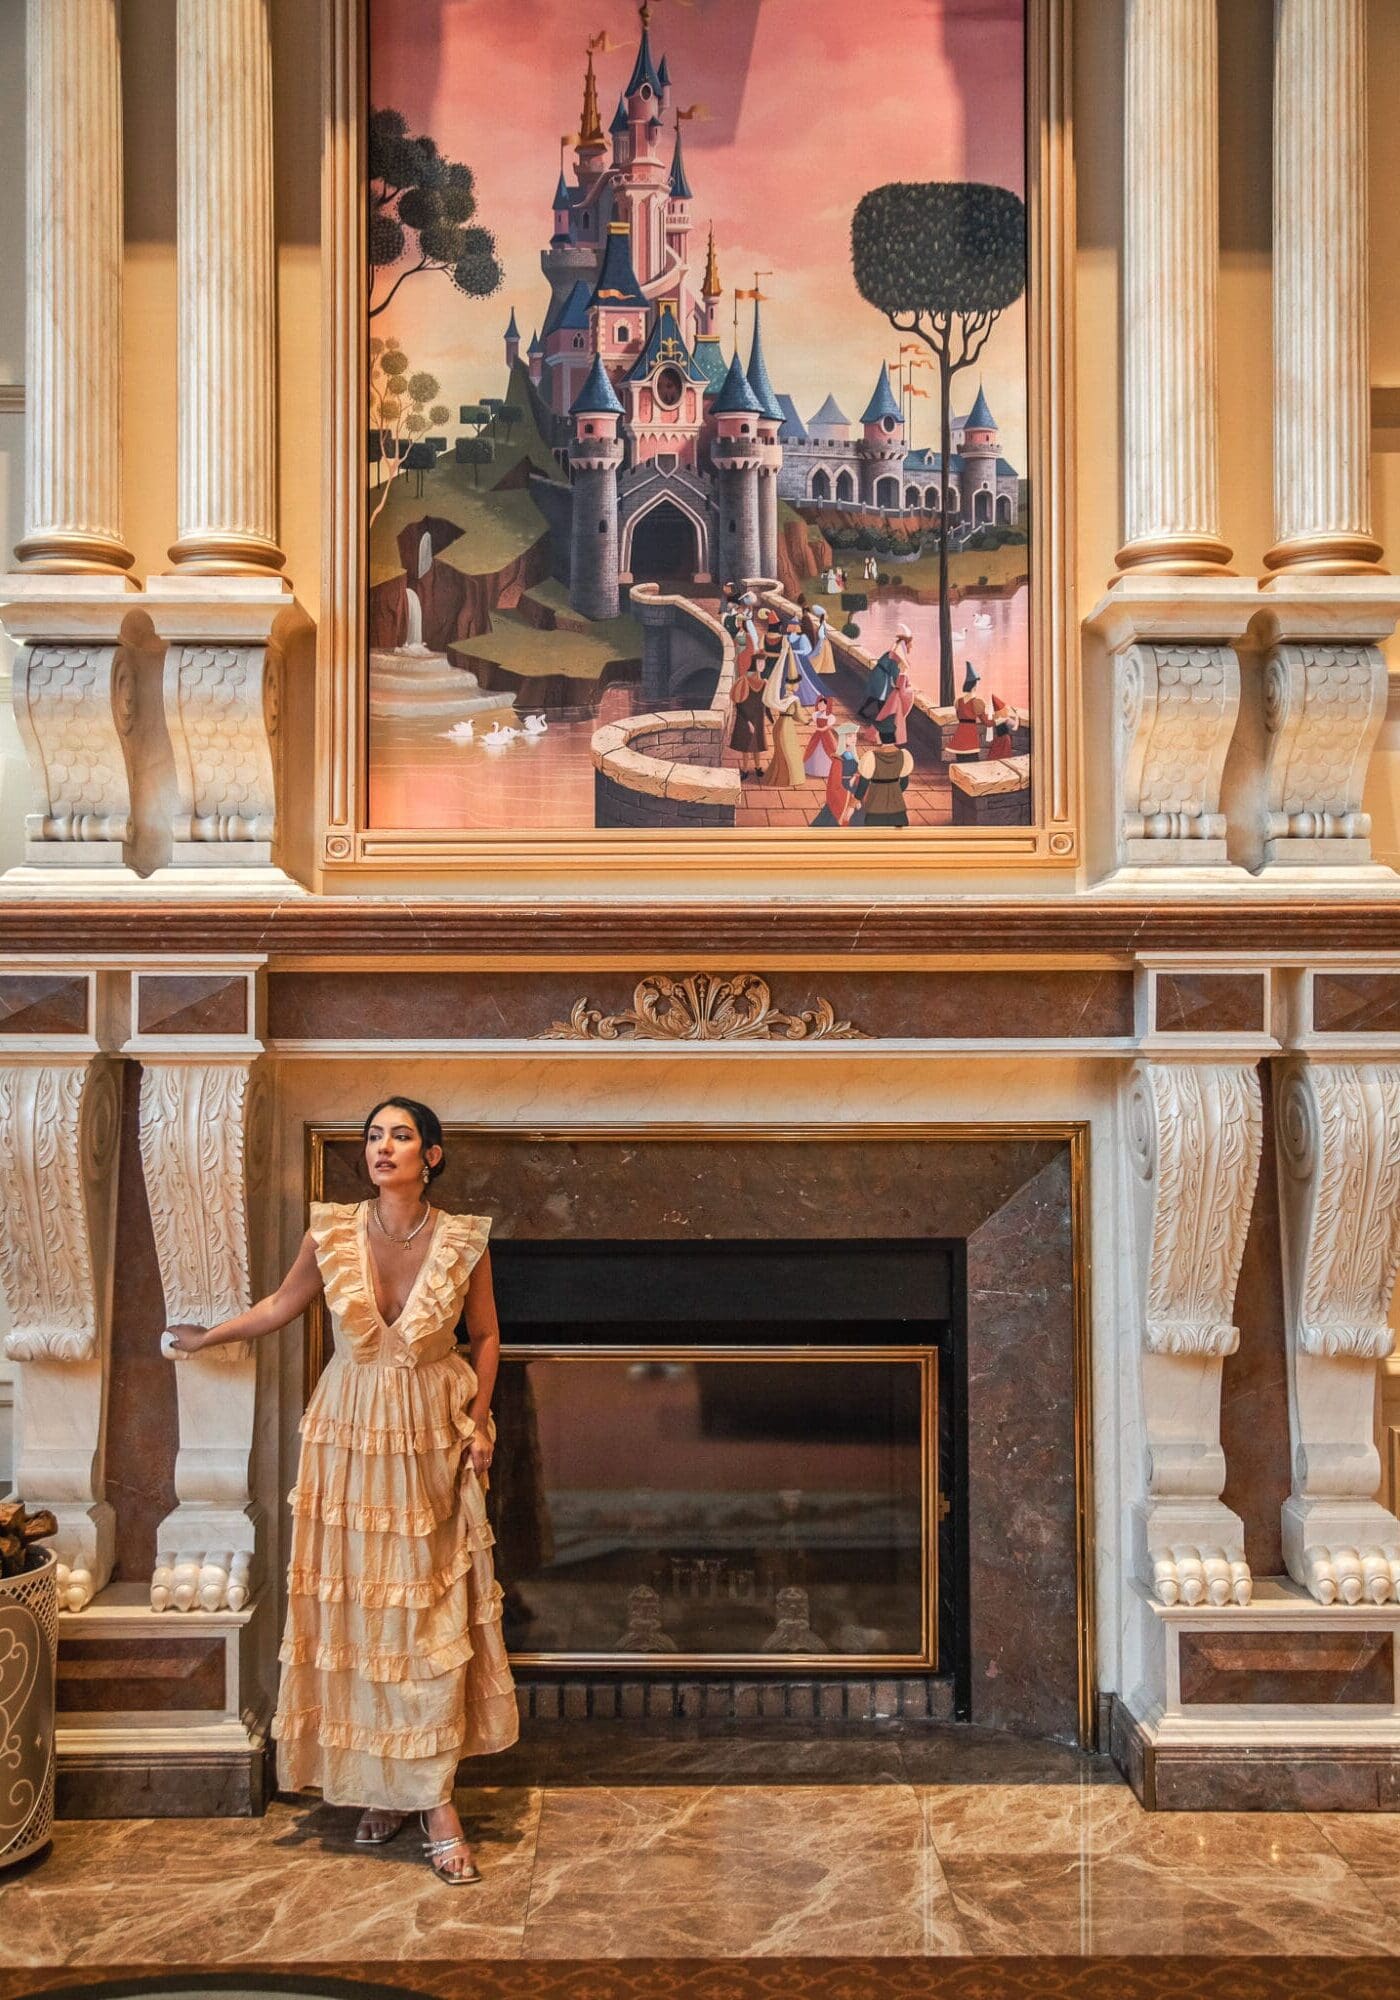 Fireplace Lobby Disneyland Hotel Paris